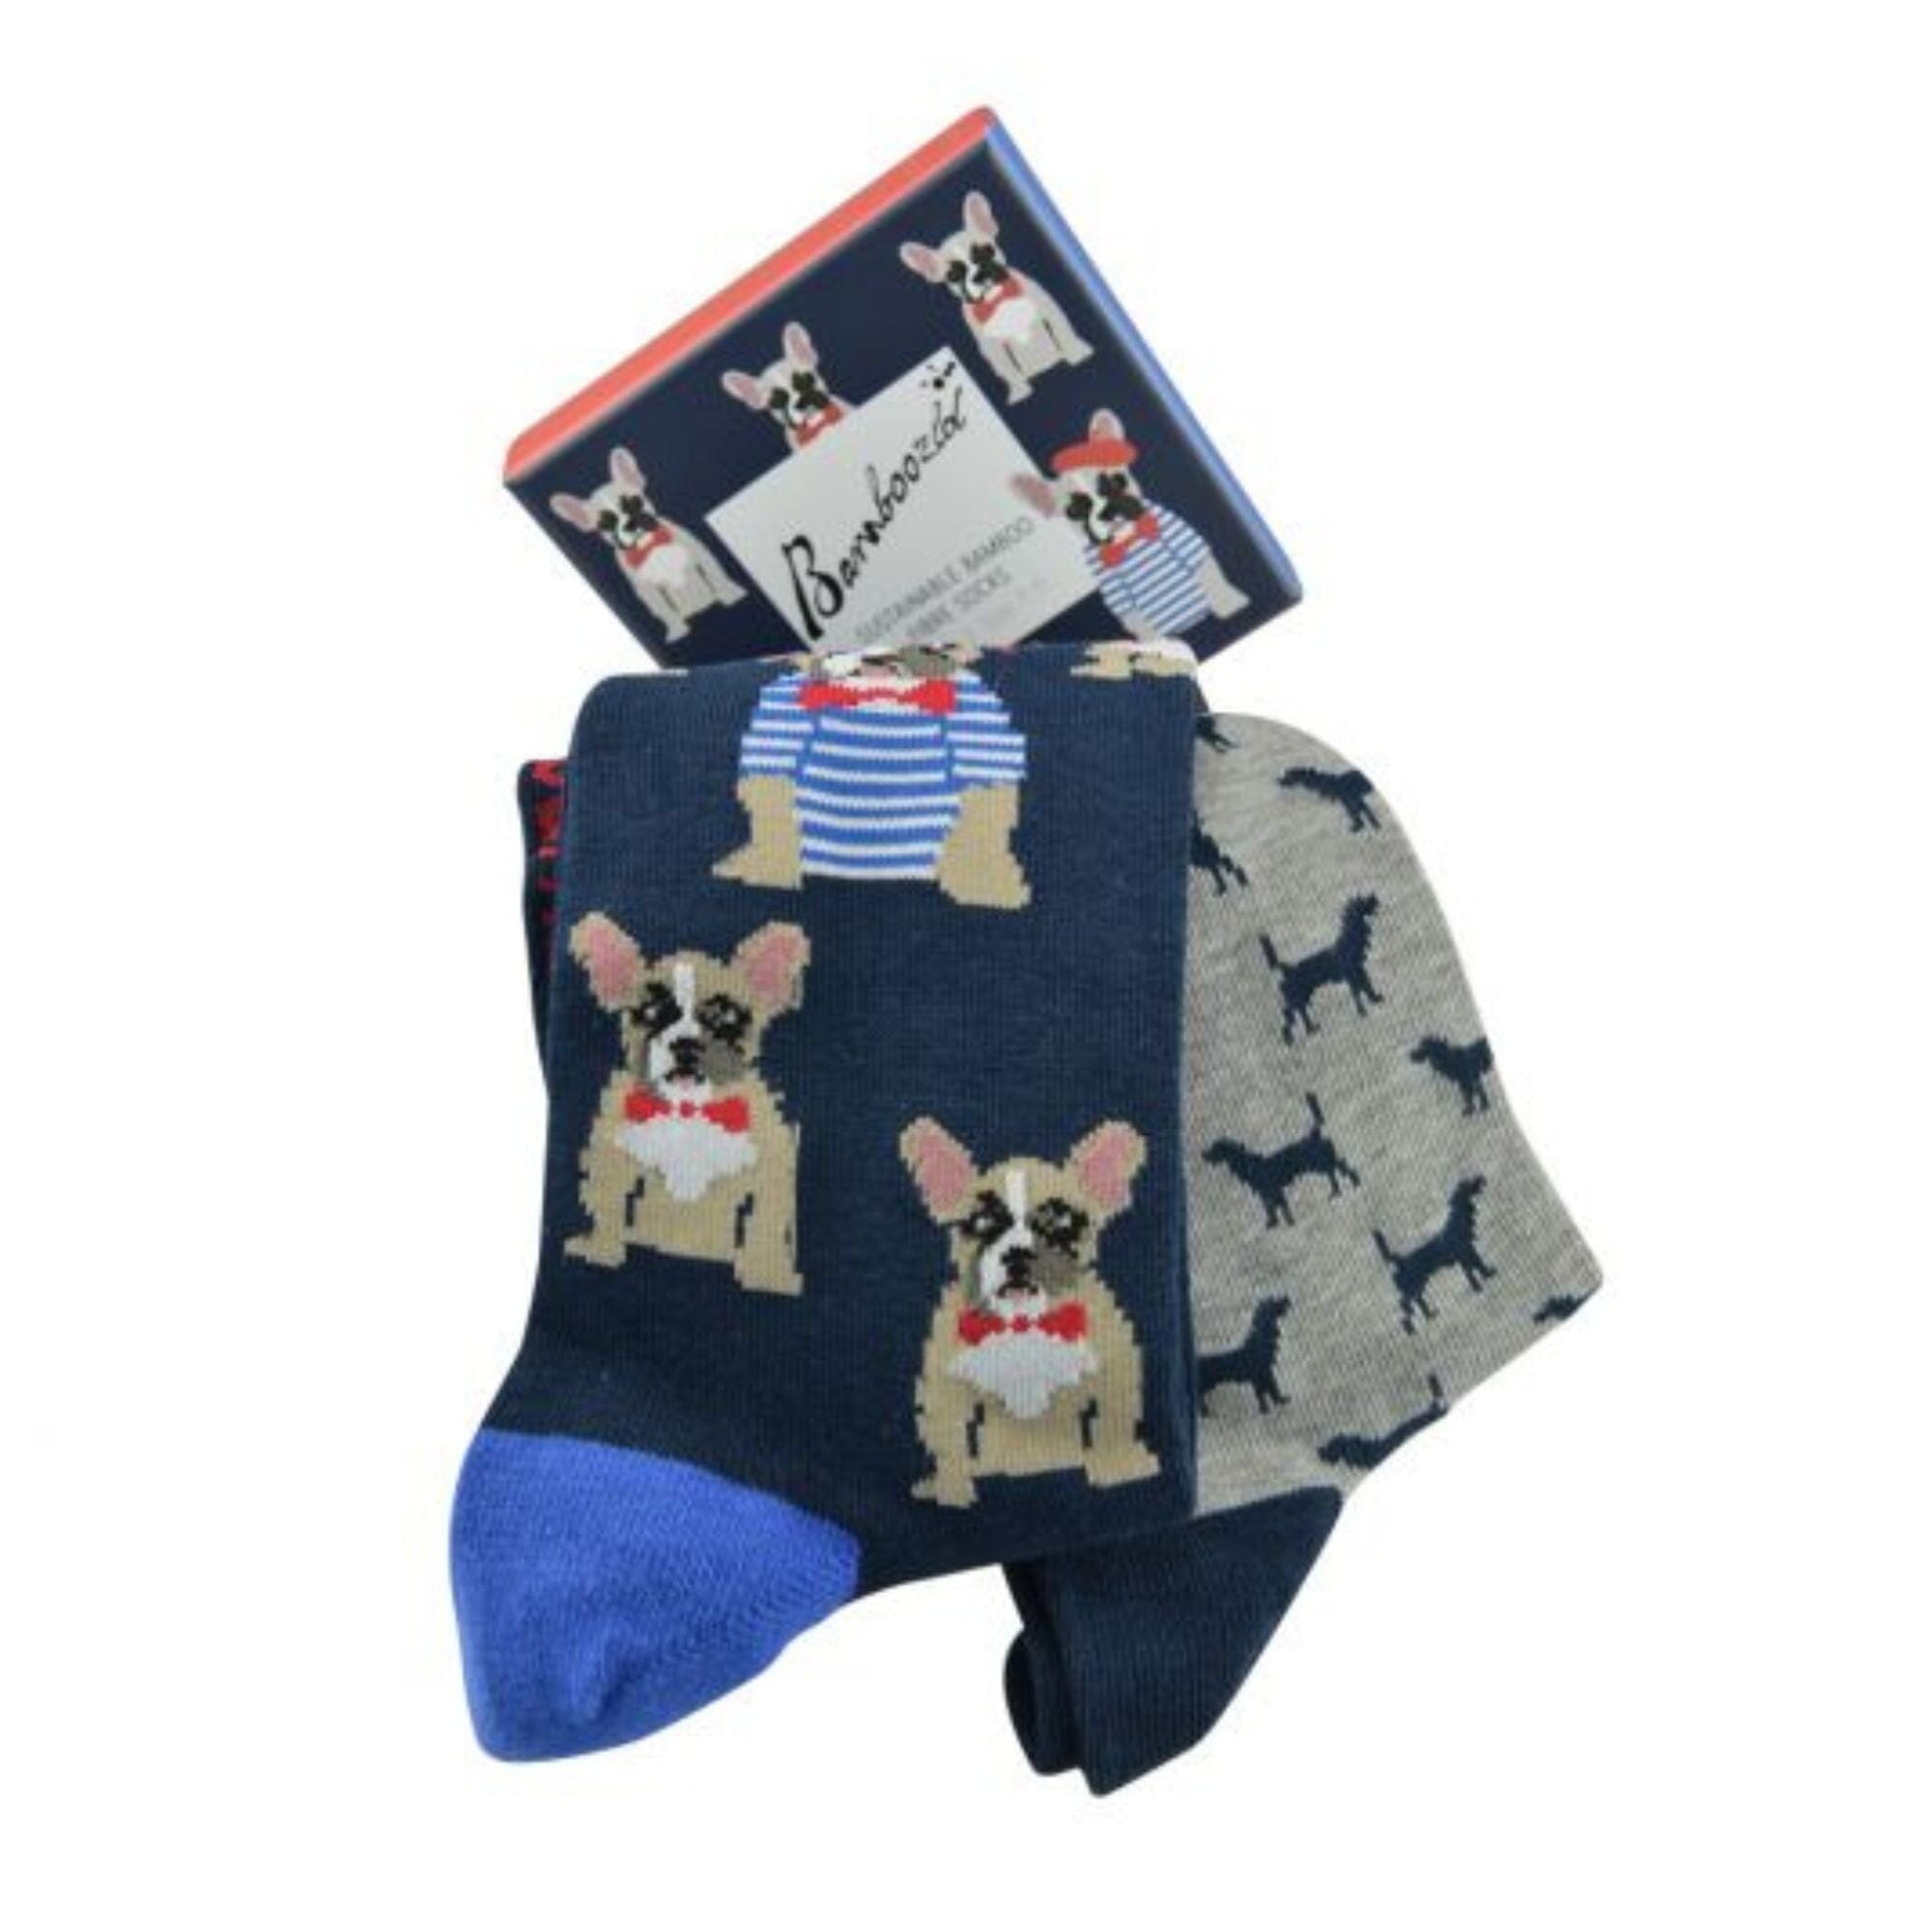 Frenchy Dogs 2 pair Socks Gift Box Socks Clinks Default 